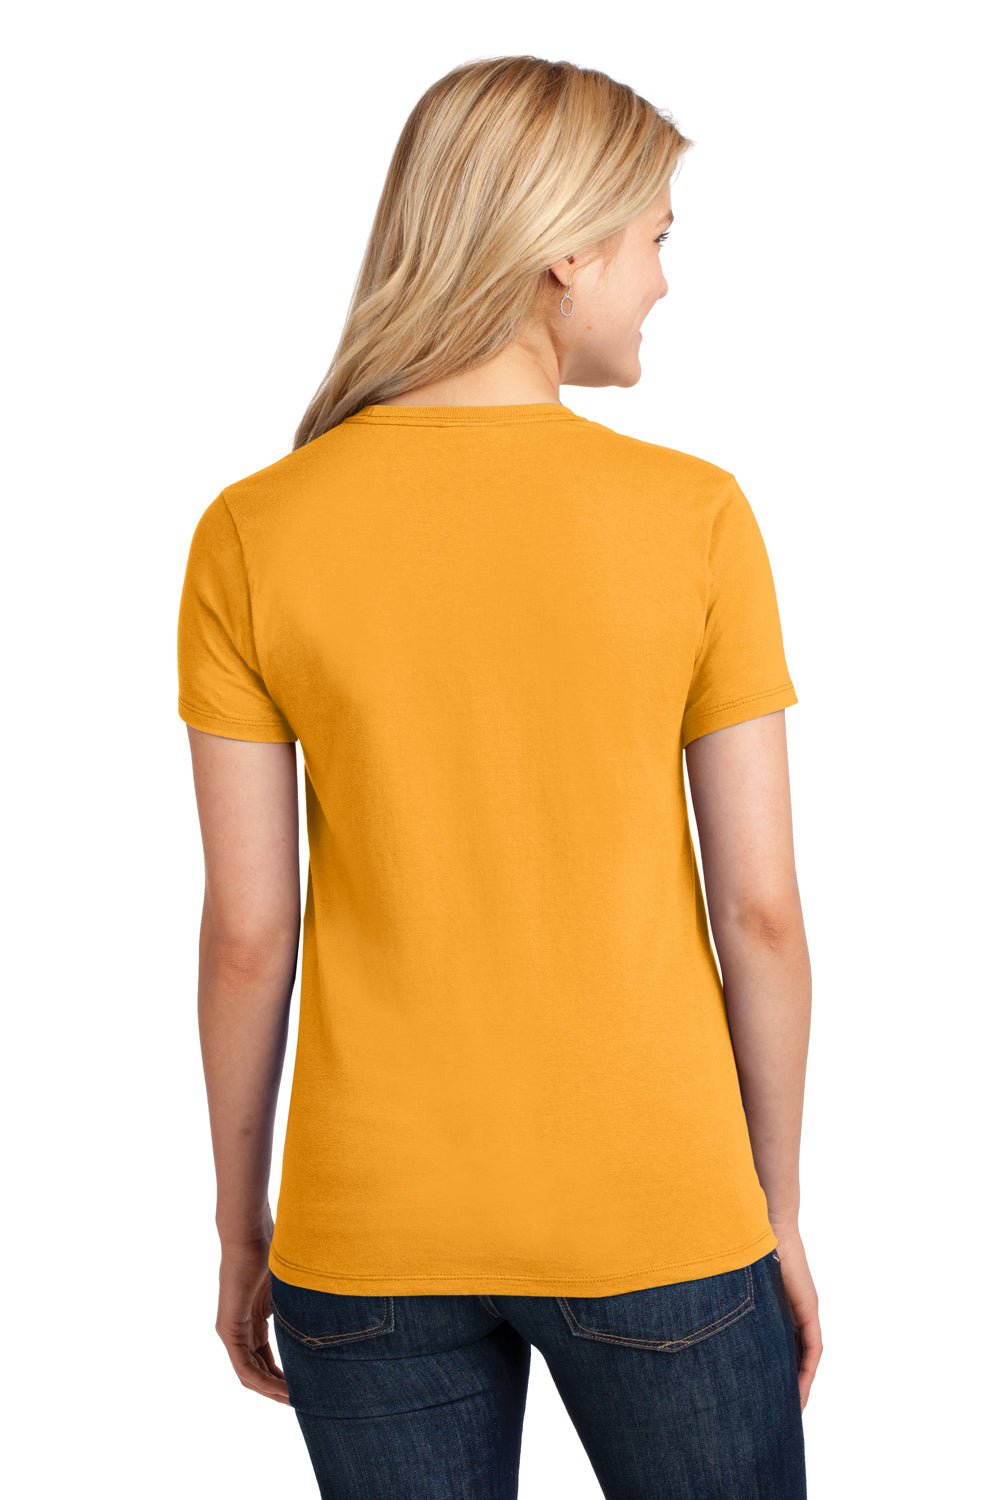 Port & Company LPC54 Womens Core Short Sleeve Crewneck T-Shirt Gold Back